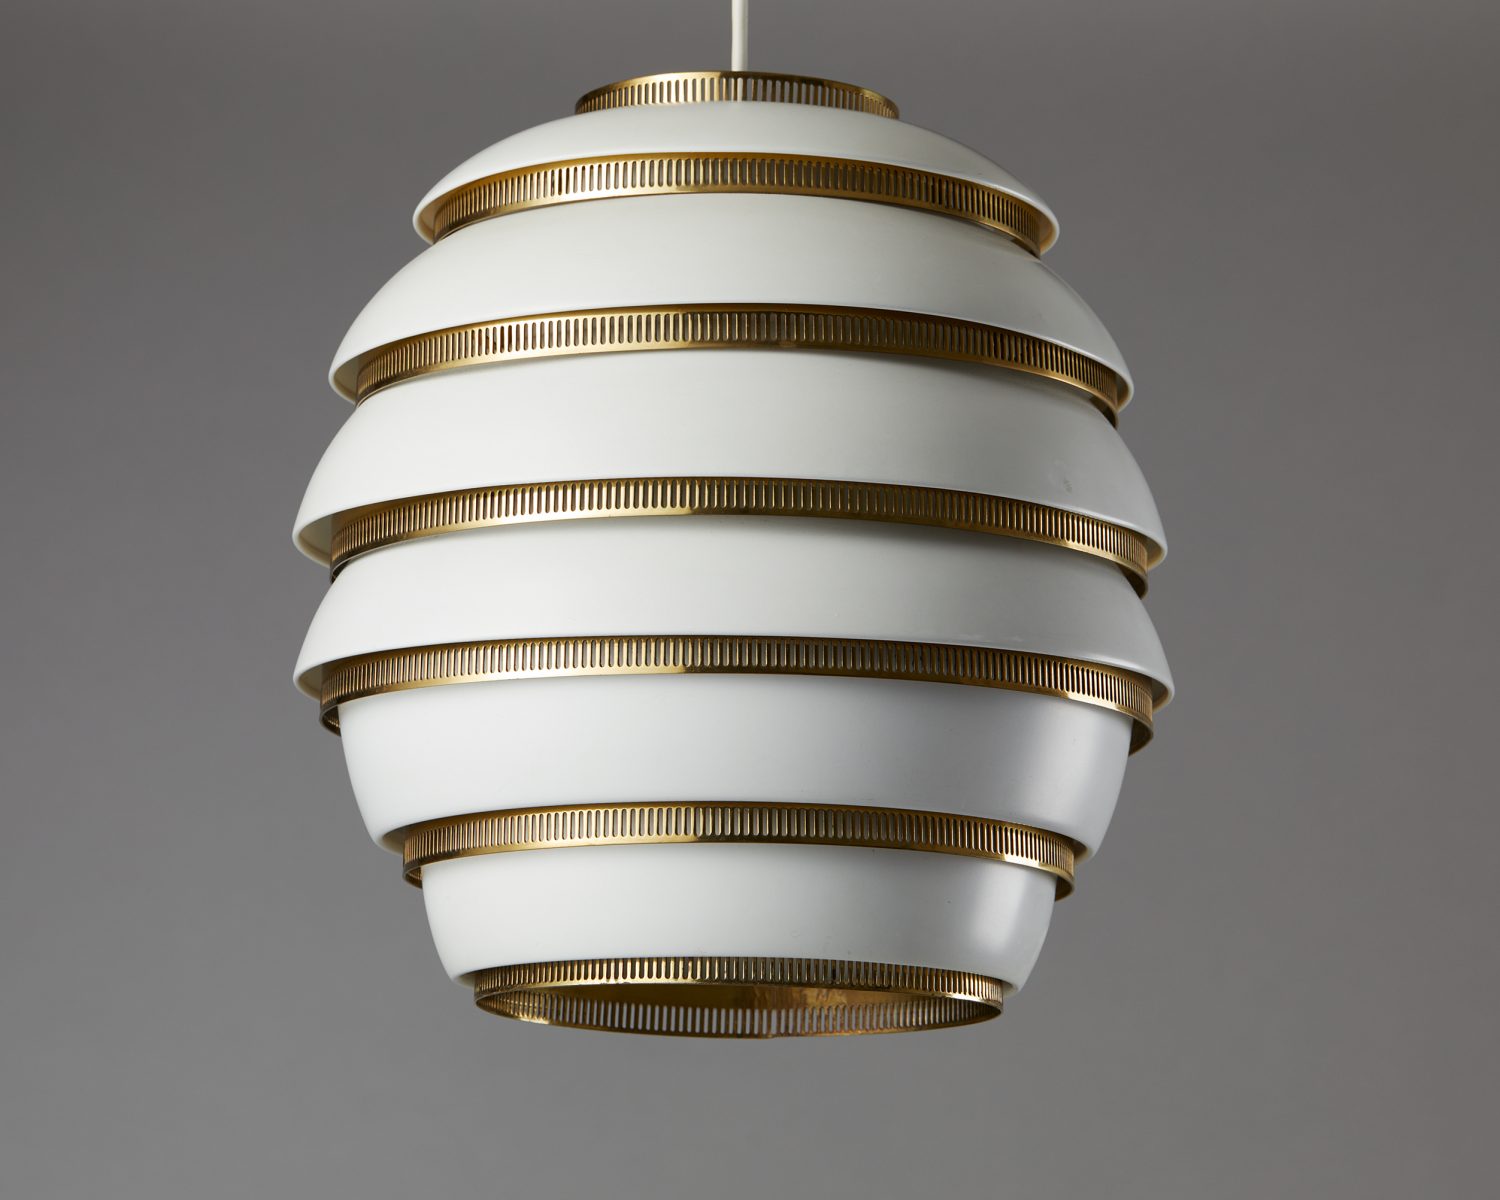 Scandinavian design at Modernity: 'Beehive' ceiling lamp by Alvar Aalto, Finland (1953)